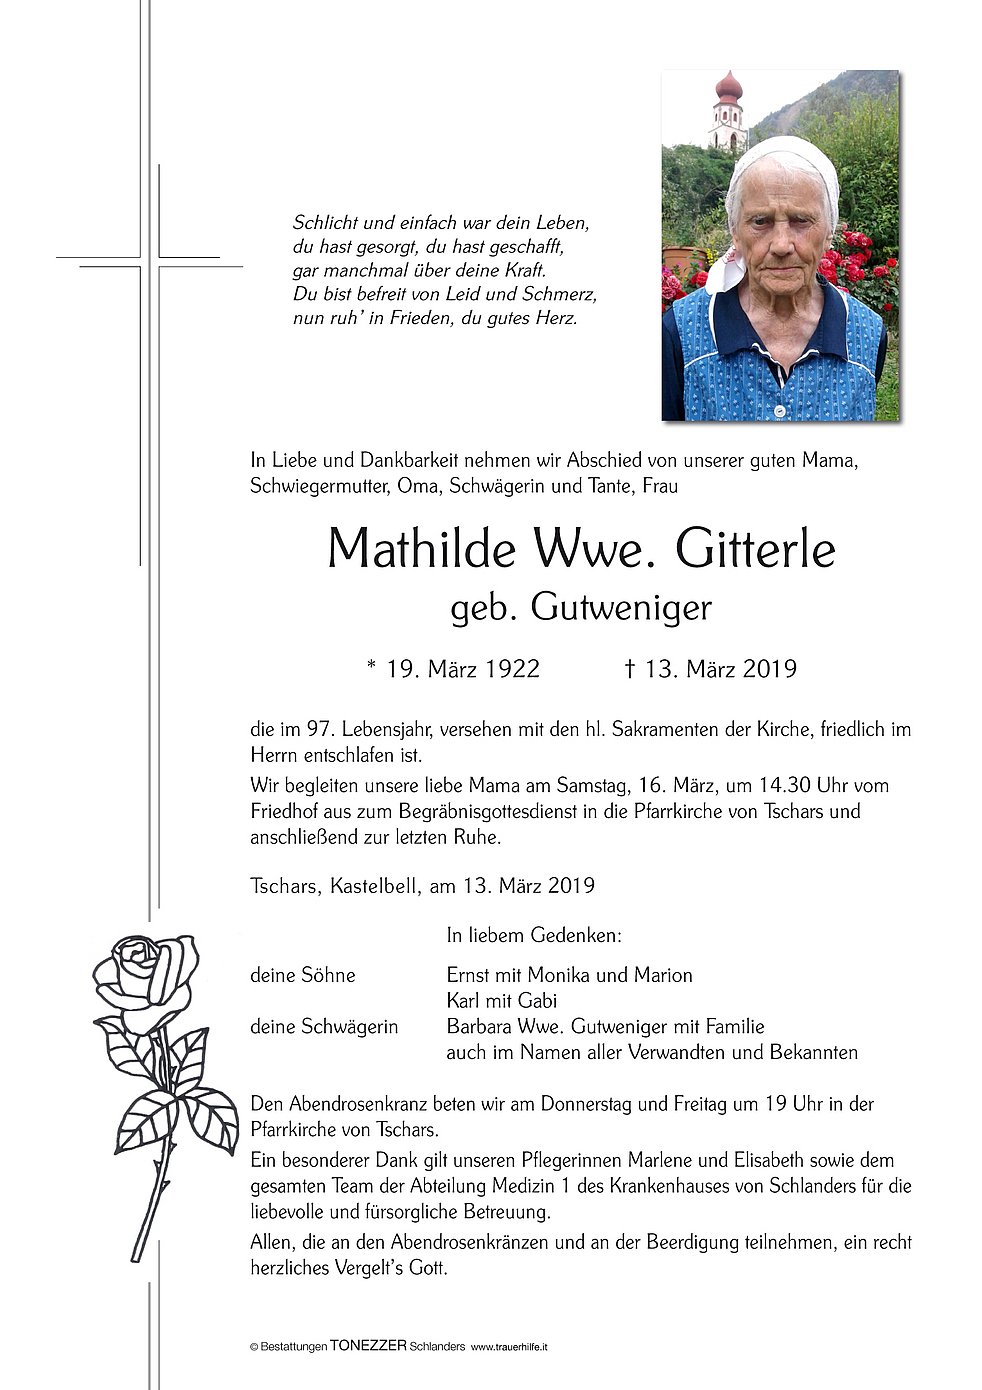 Mathilde Wwe Gitterle Aus Kastelbell Tschars Trauerhilfeit Das Südtiroler Gedenkportal 